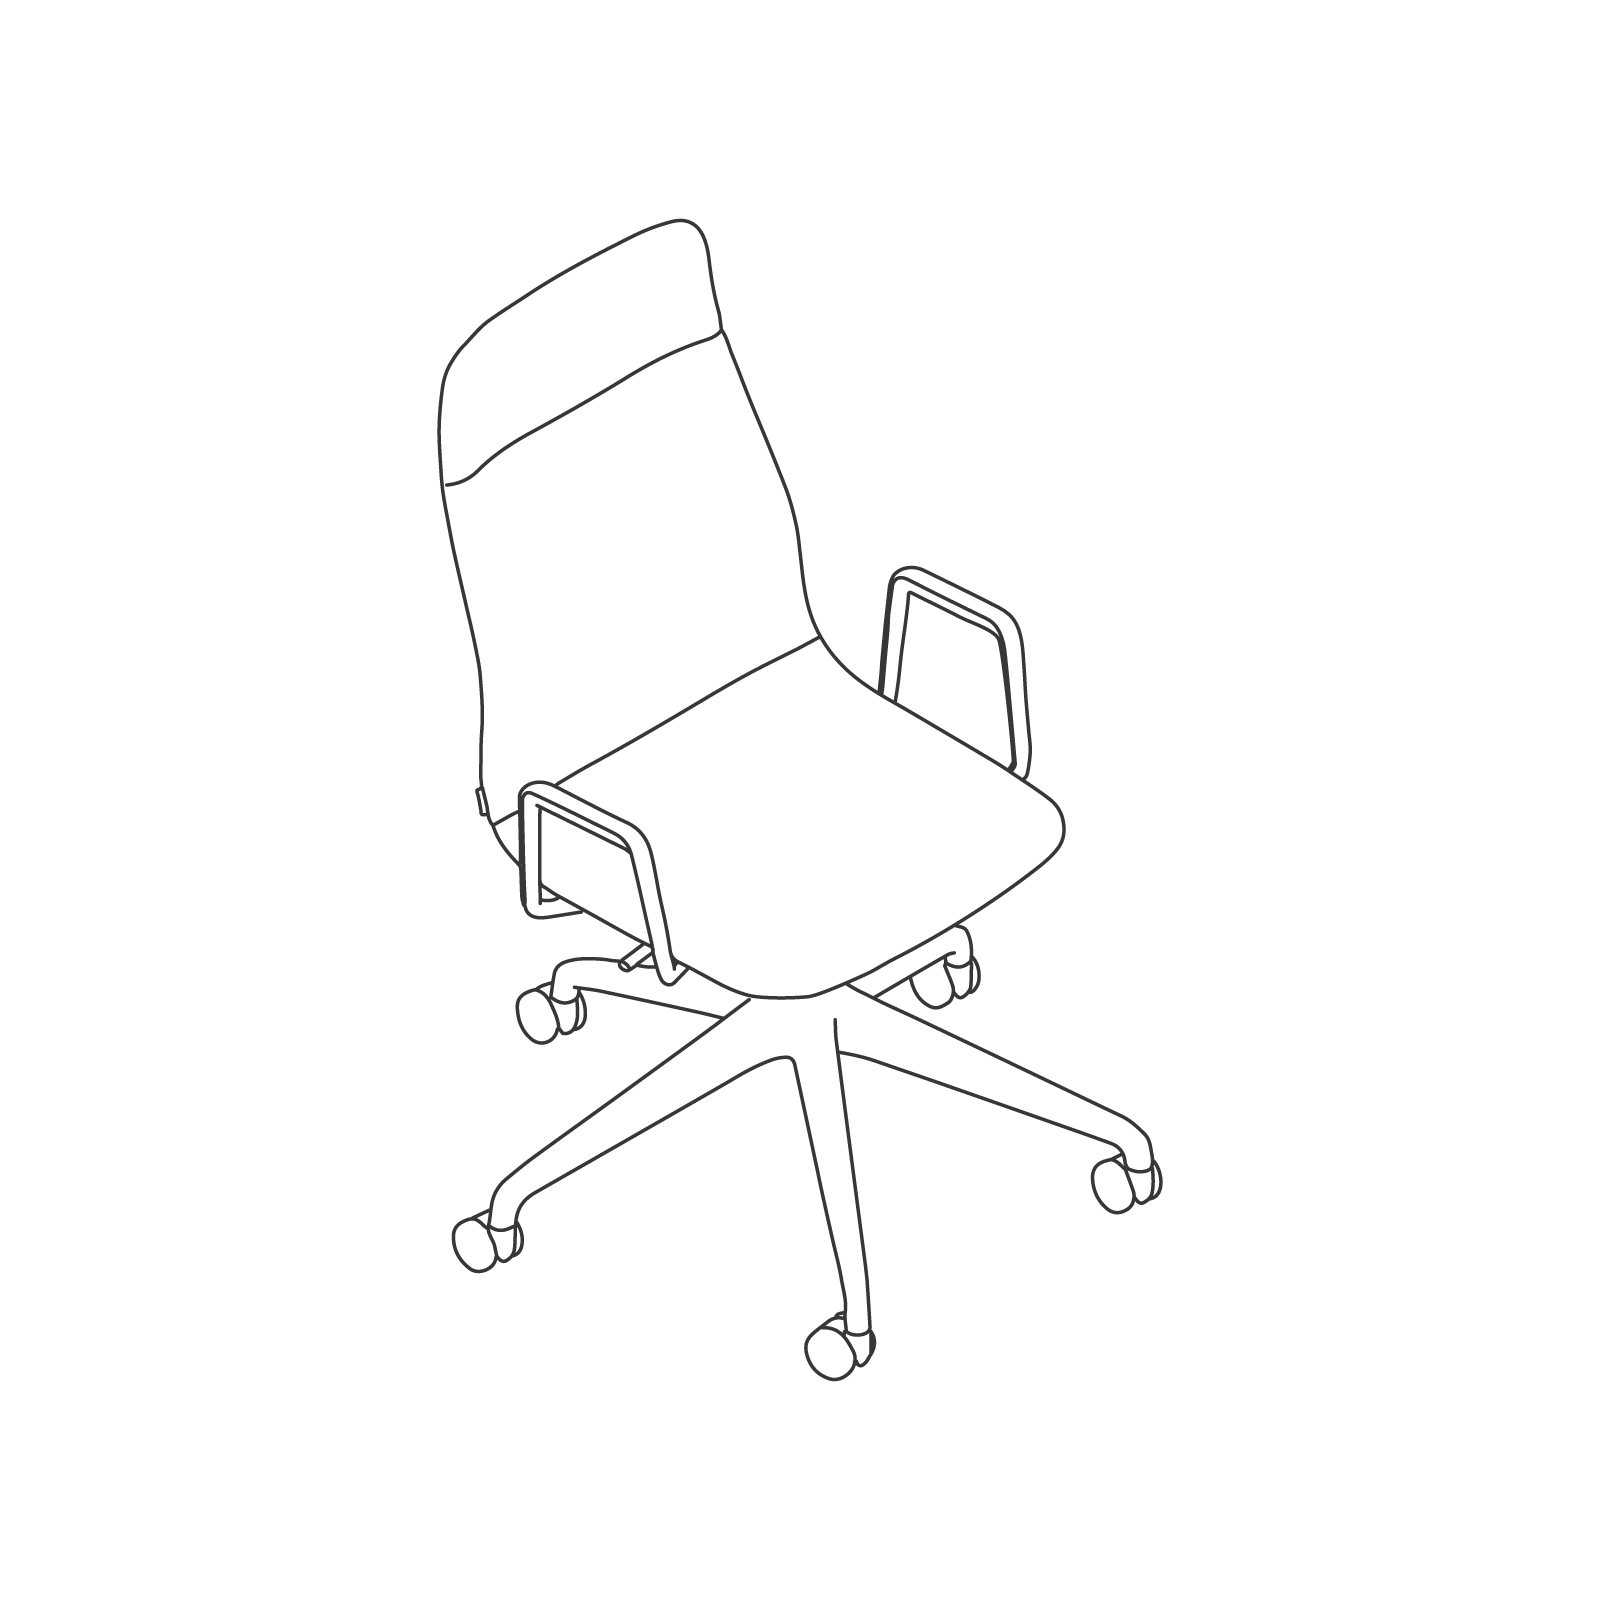 Viv Chair - Desk Chairs - Herman Miller